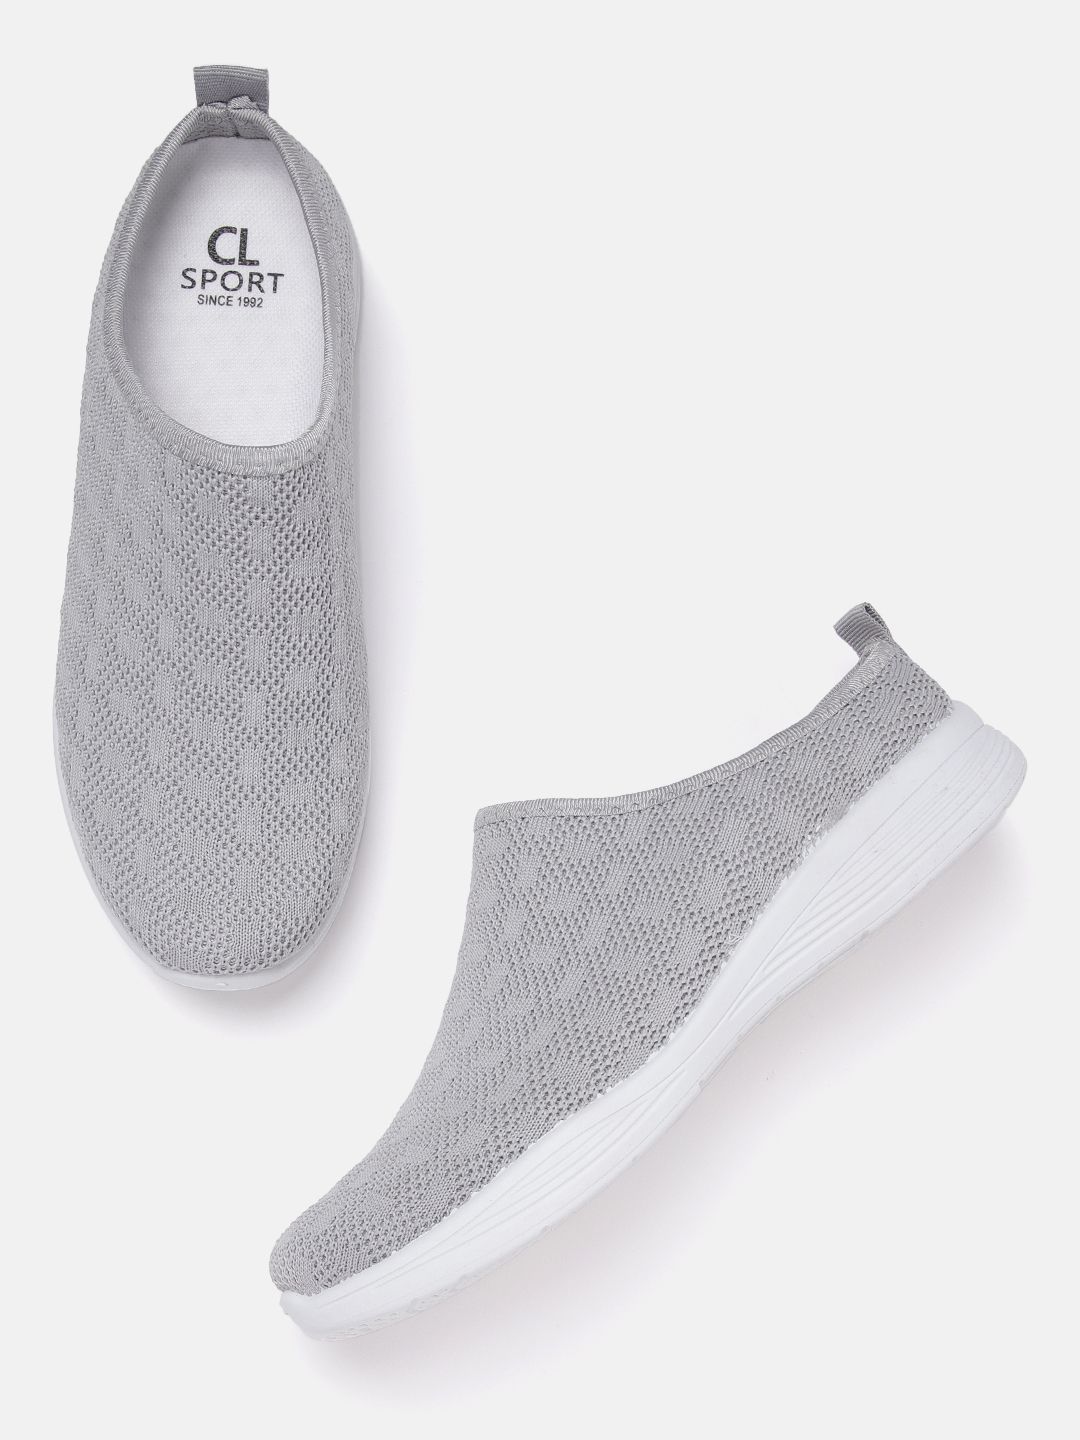 Carlton London sports Women Grey Woven Design Slip-On Sneakers Price in India